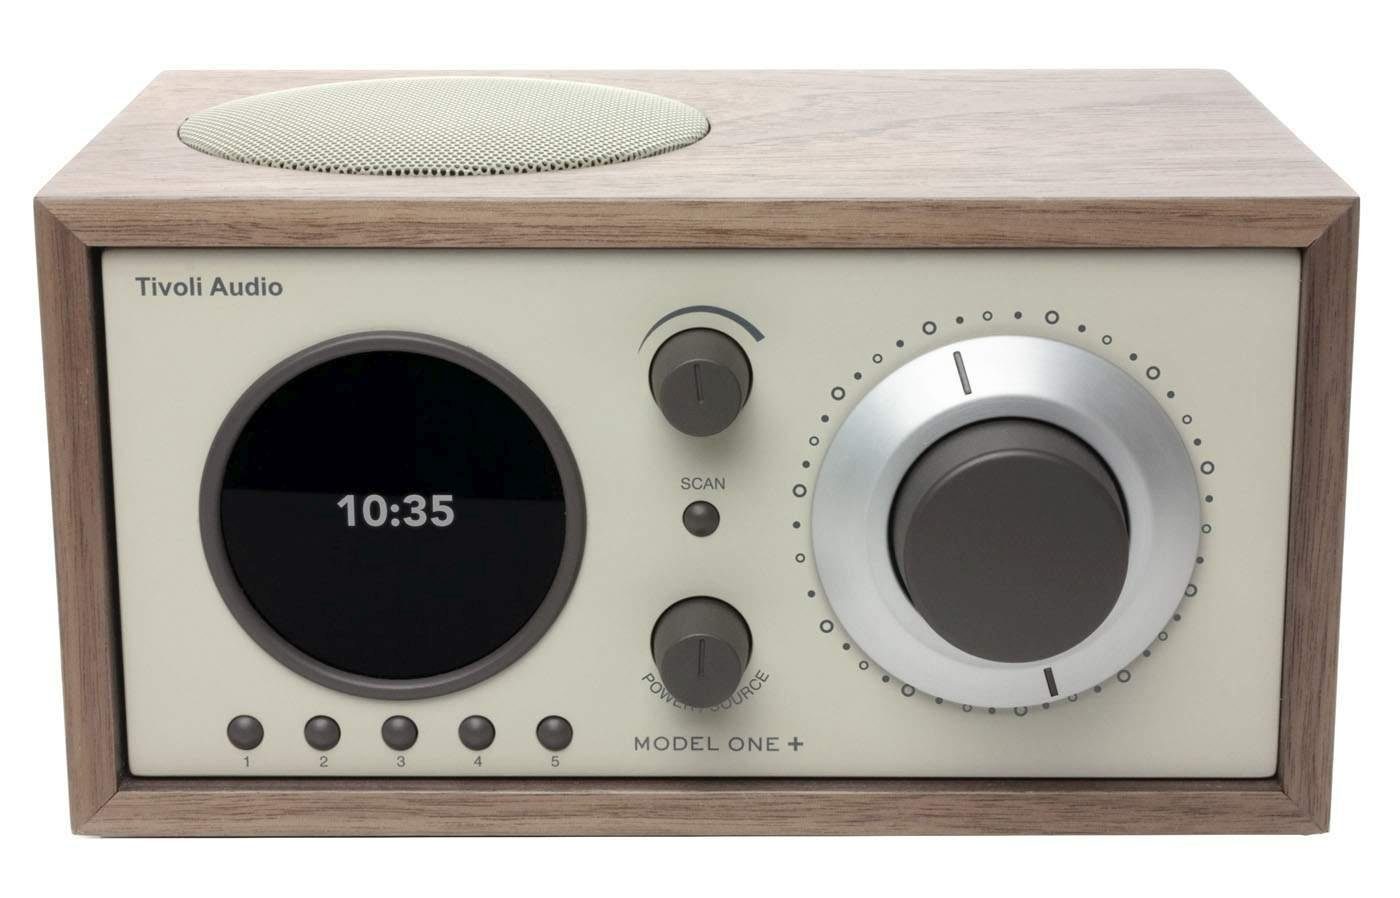 Audio Walnuss/beige (Digitalradio Digitalradio Digitalradio Fernbedienung) (DAB),FM-Tuner, Uhranzeige, FM-Tuner, (DAB) DAB+ und Bluetooth-Empfänger, ONE+ Model Wecker,Display Tivoli mit